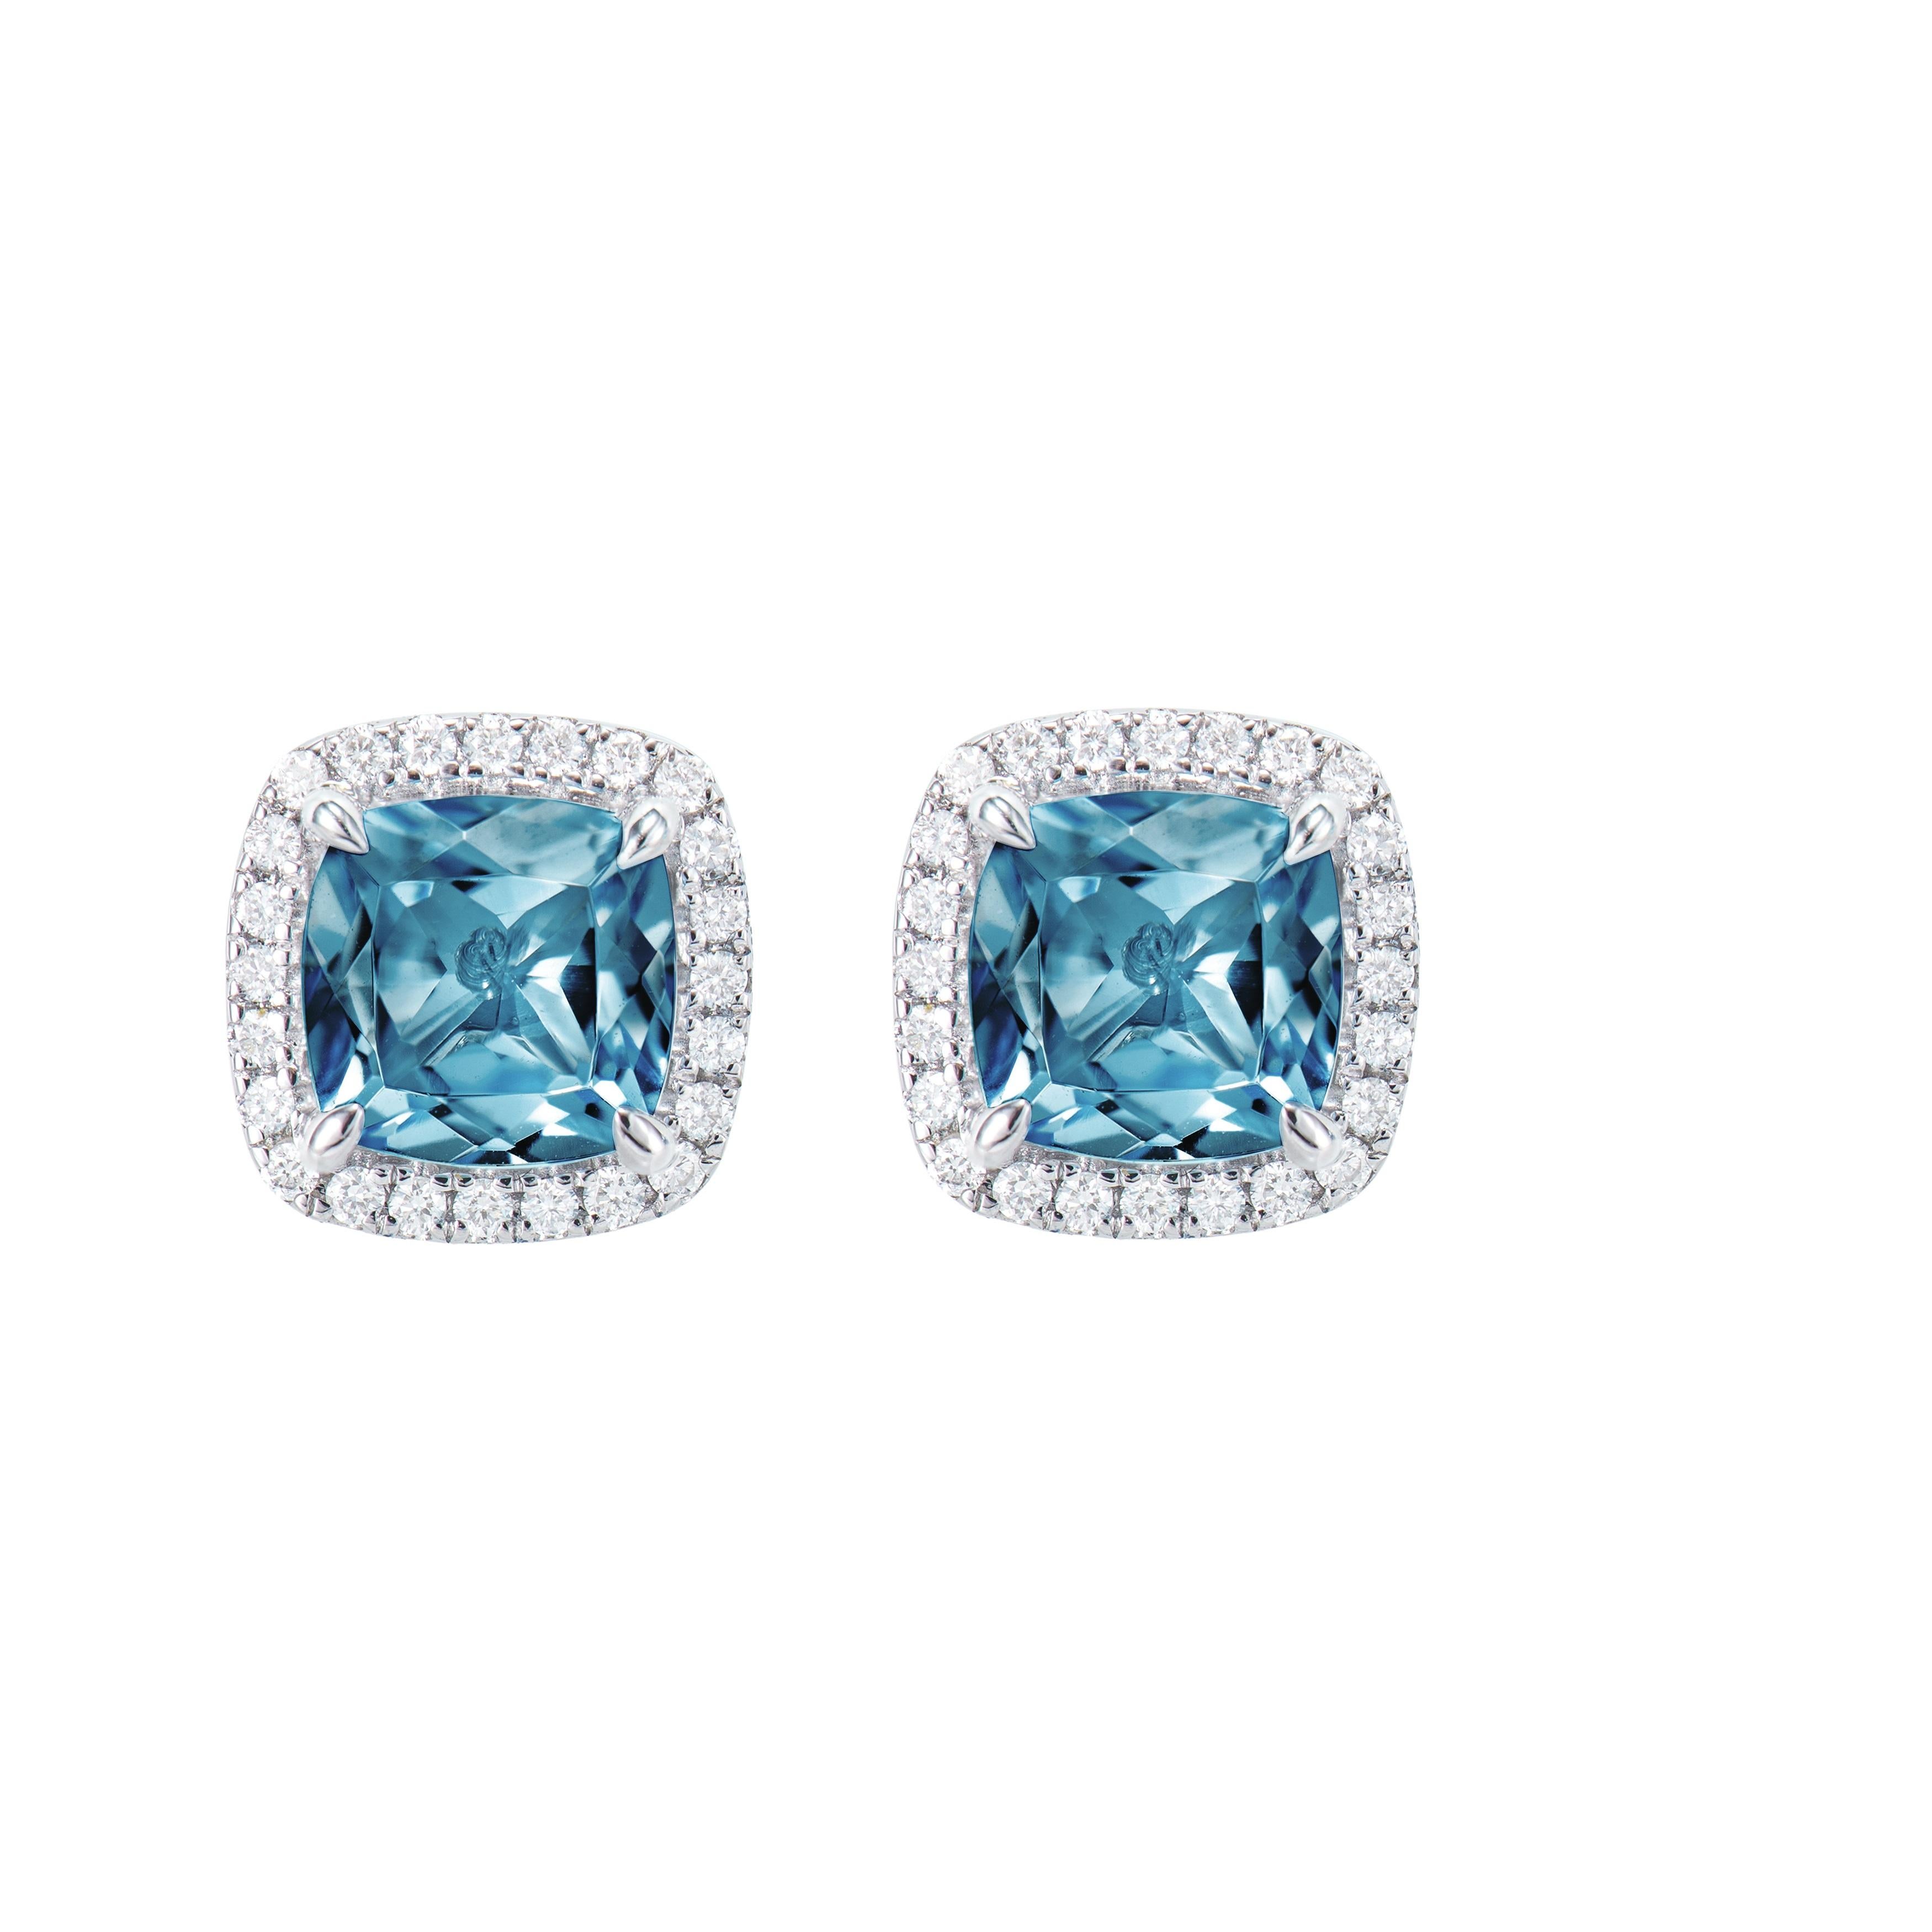 Modern 2.26 Carat London Blue Topaz Stud Earrings in 18KWG with White Diamond. For Sale